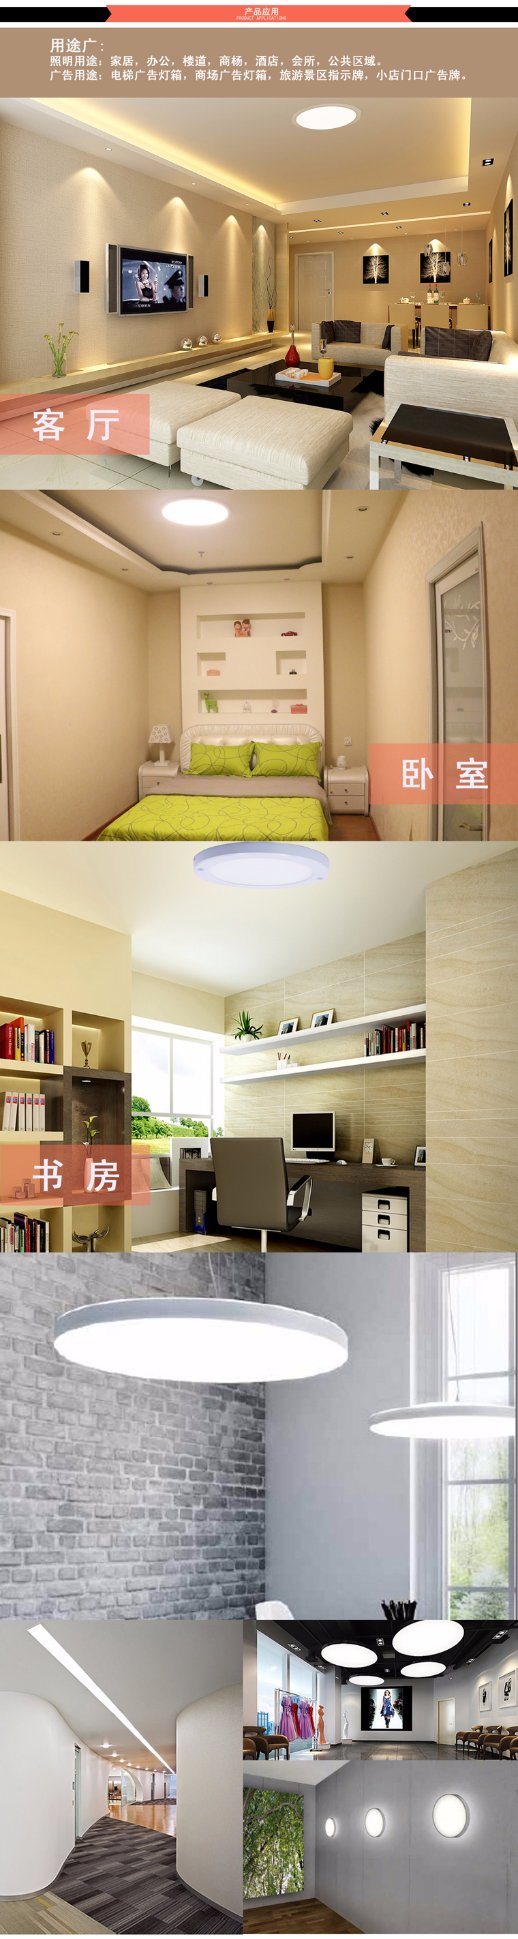 Rai>80 18W Square LED Panel Light LED Panel Ceiling LED Panel Lamp with Bulit in LED Driver